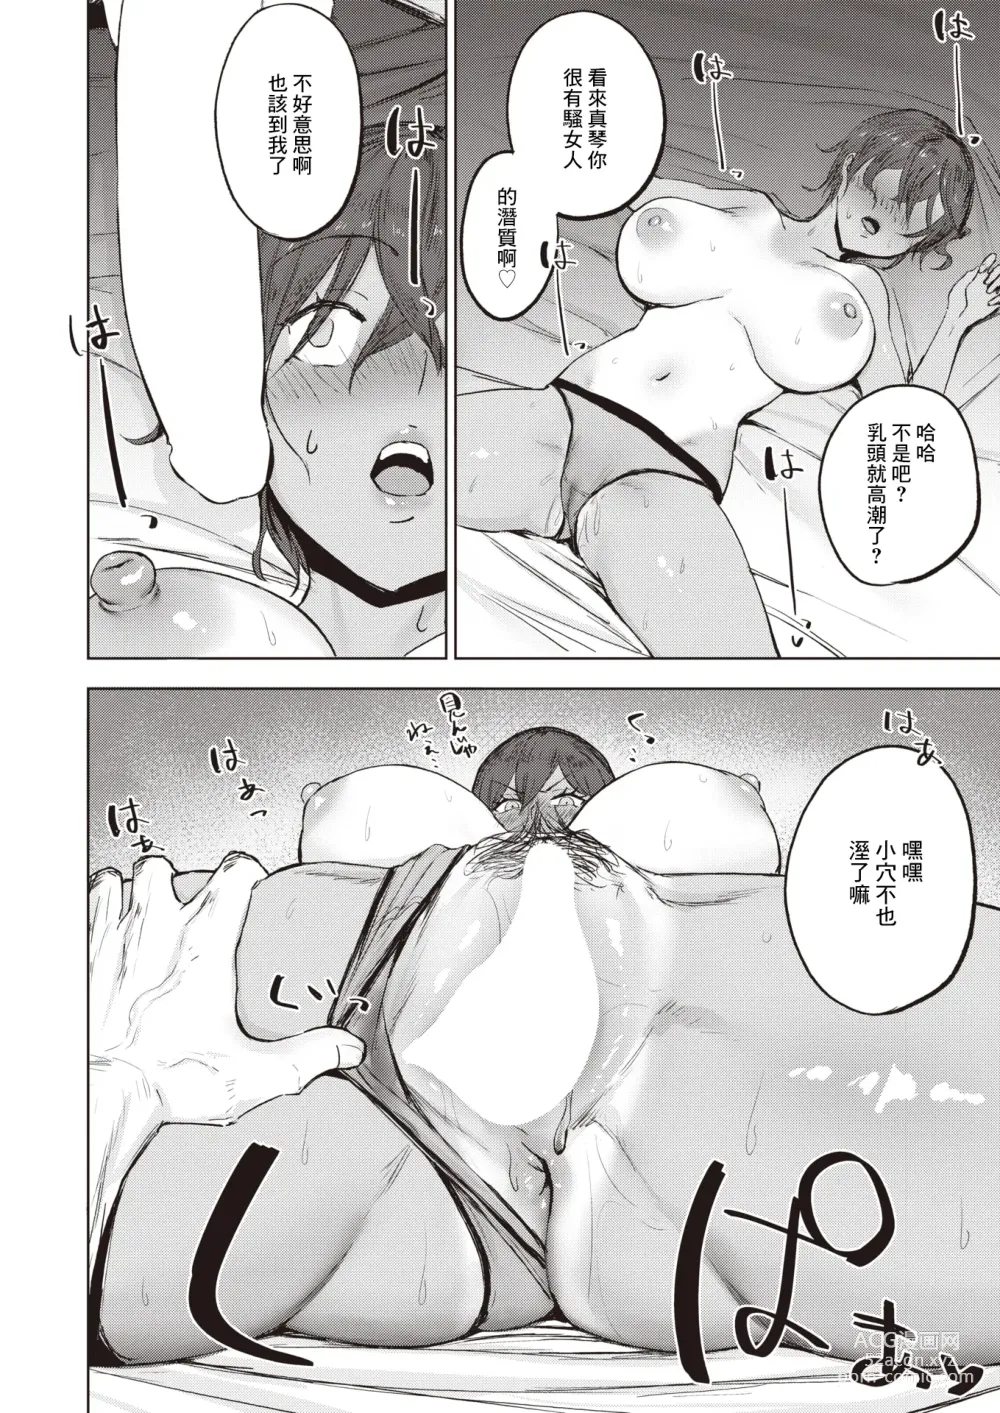 Page 11 of manga Kimochii  Koto  ni wa Sakaraenai - musclehead girl cant resist orgasm